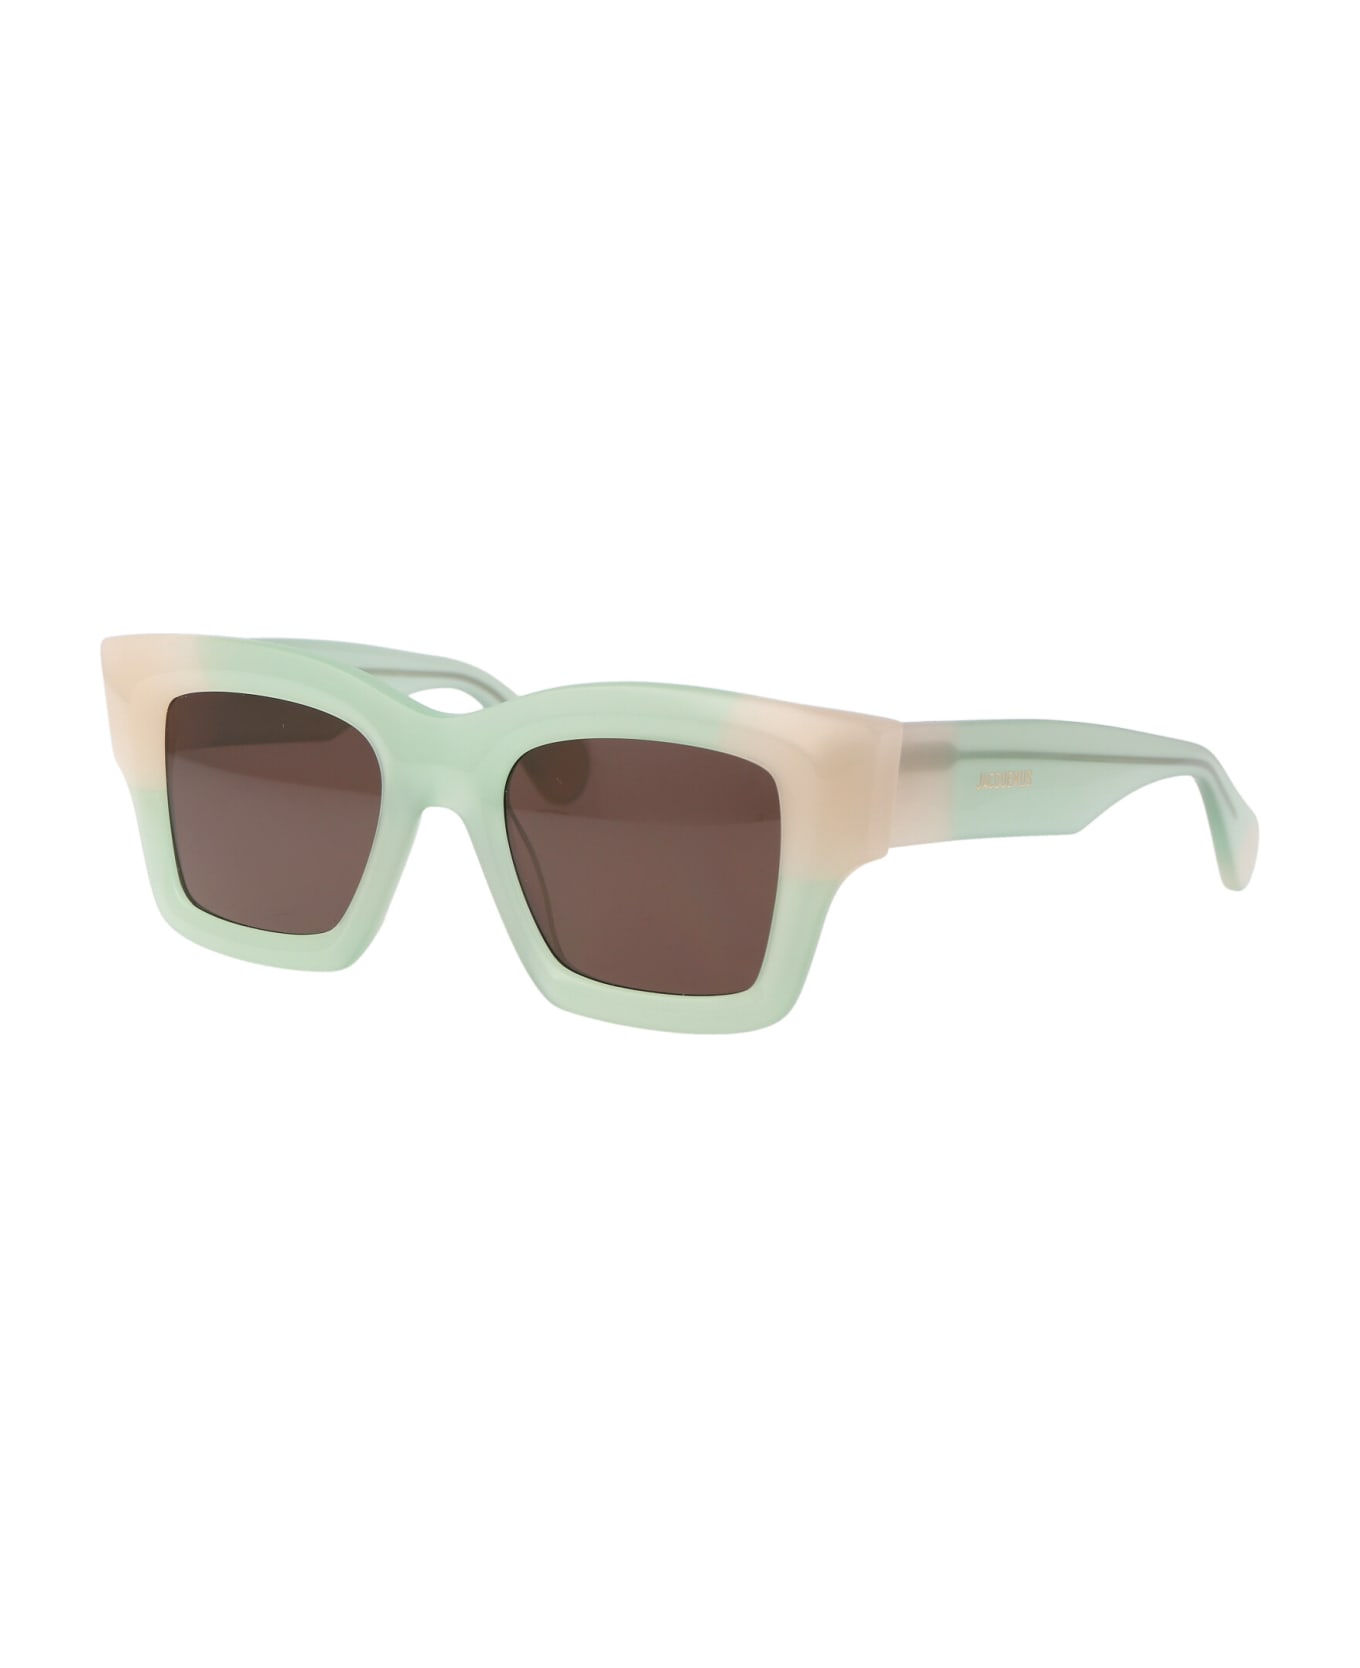 Jacquemus Les Lunettes Baci Sunglasses - GREEN サングラス